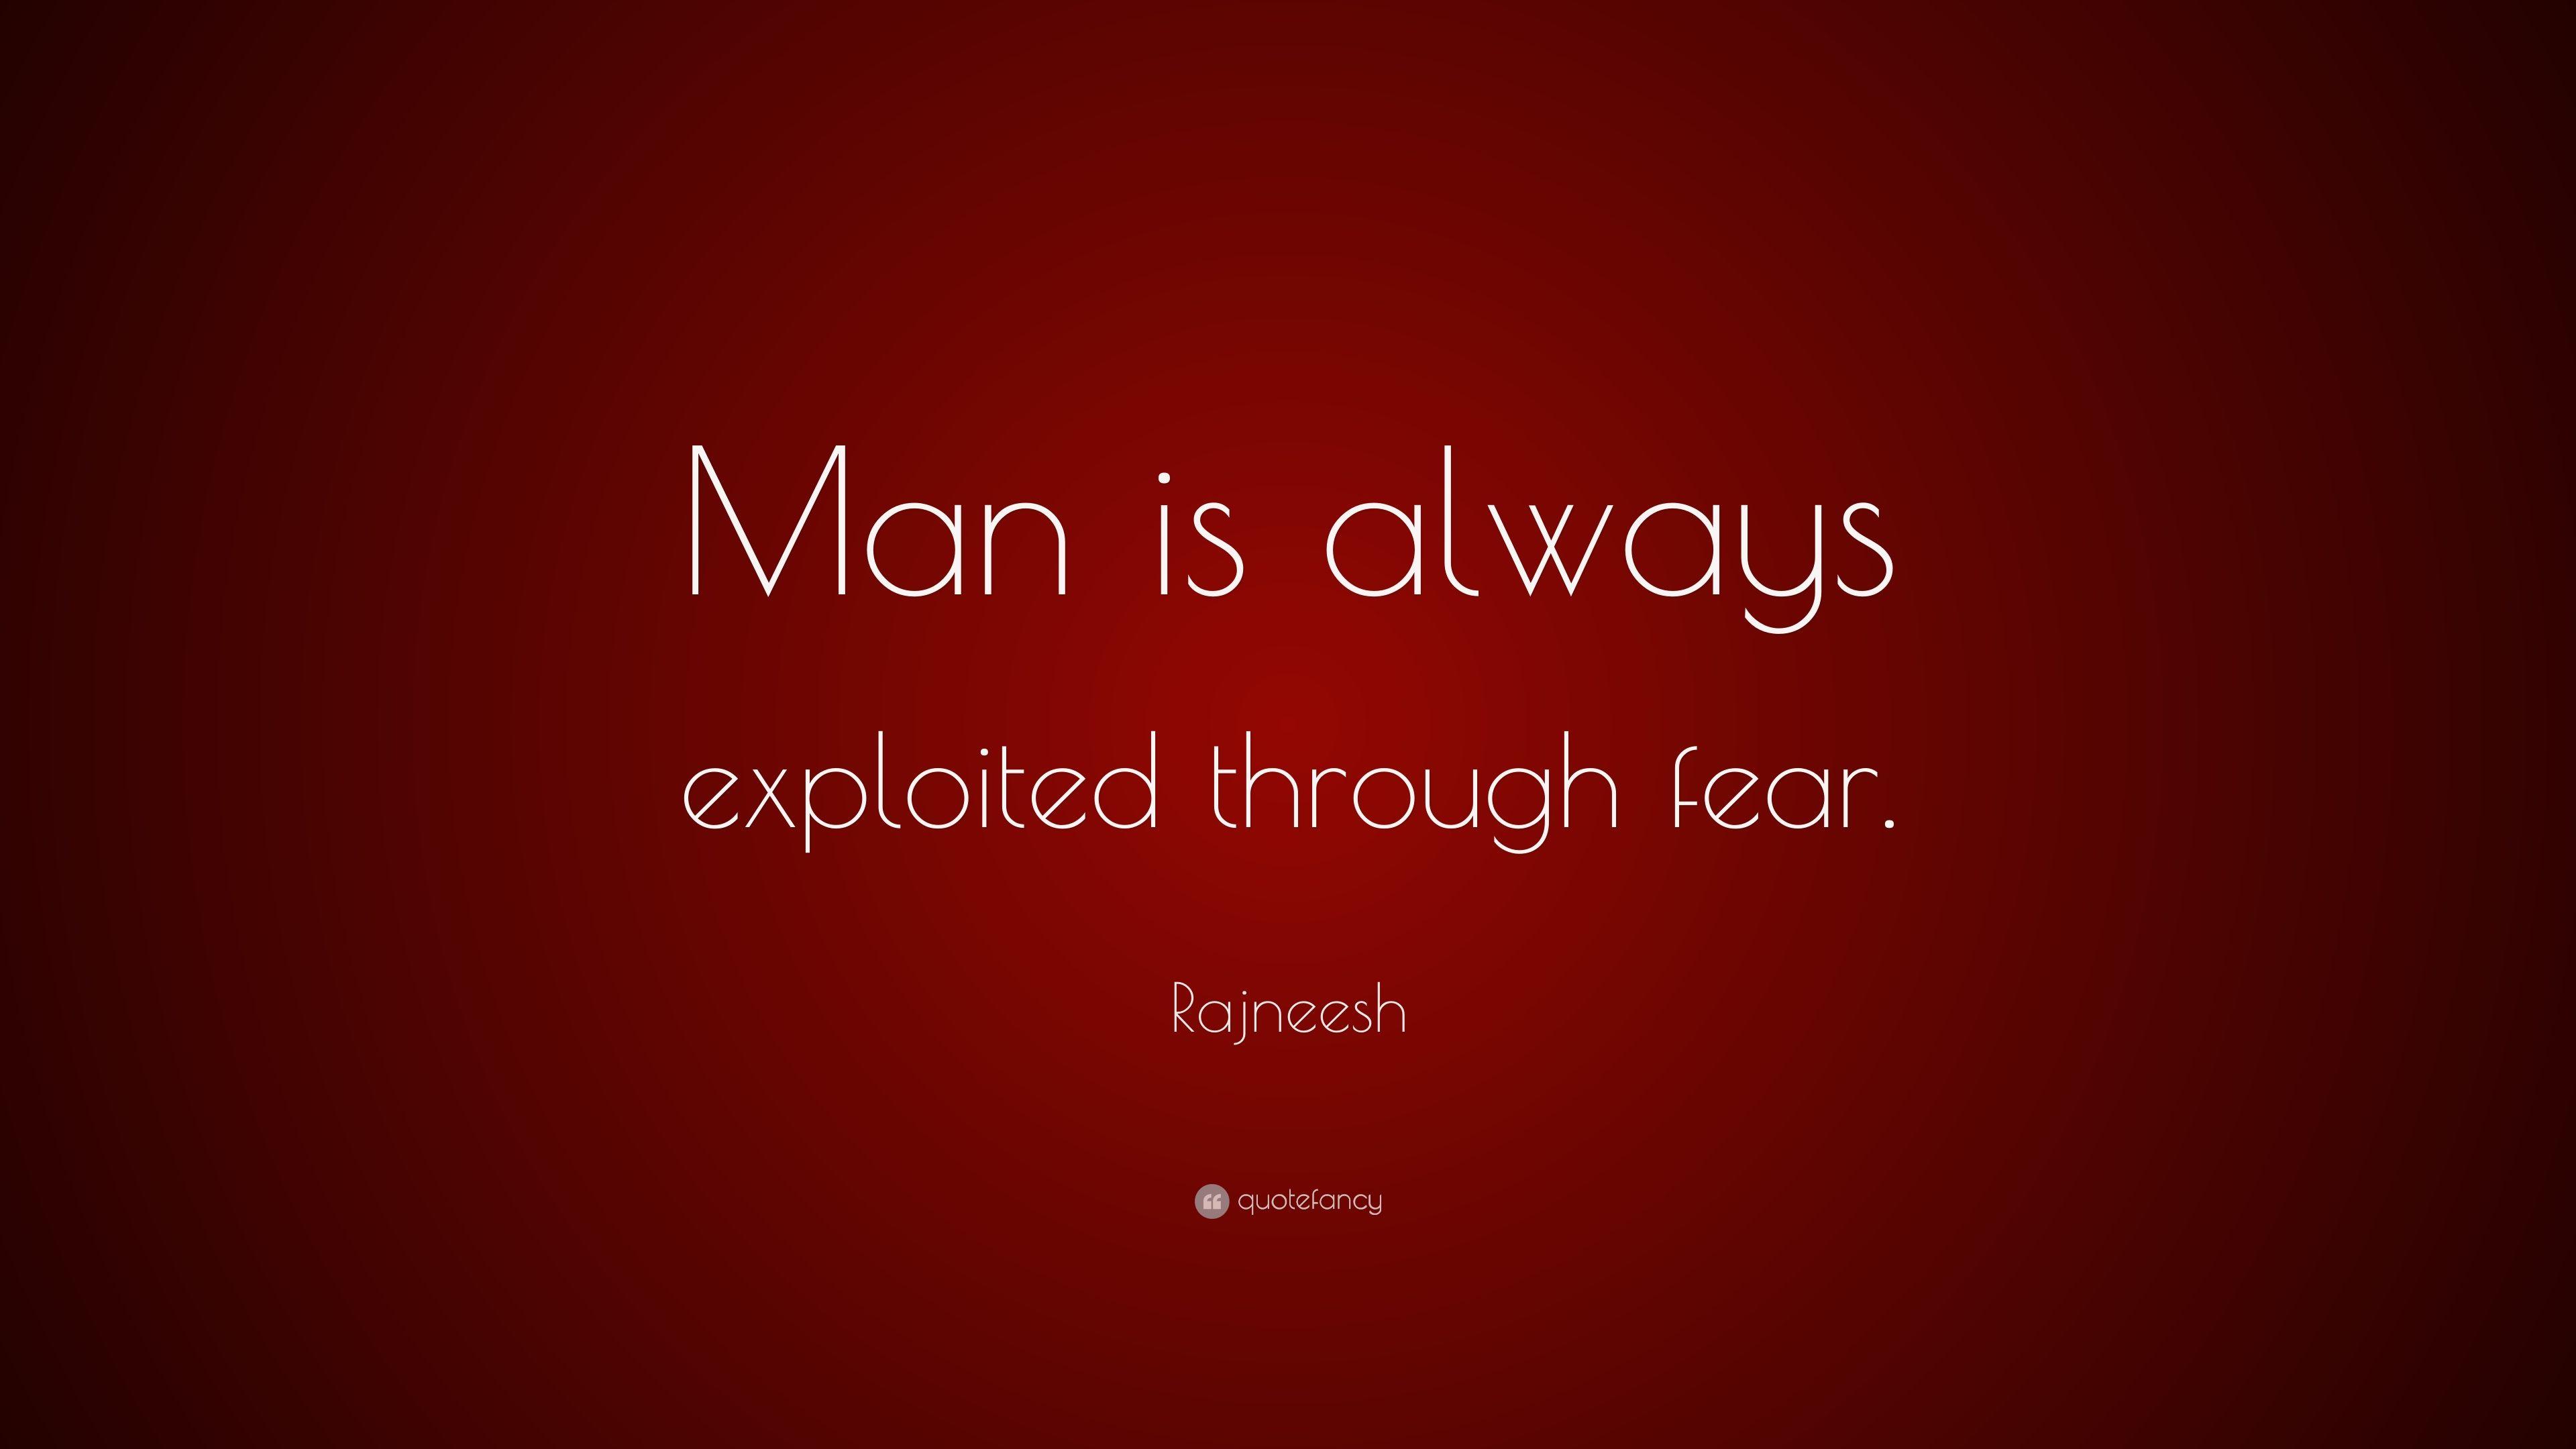 Rajneesh Quote: “Man is always exploited through fear.” 7